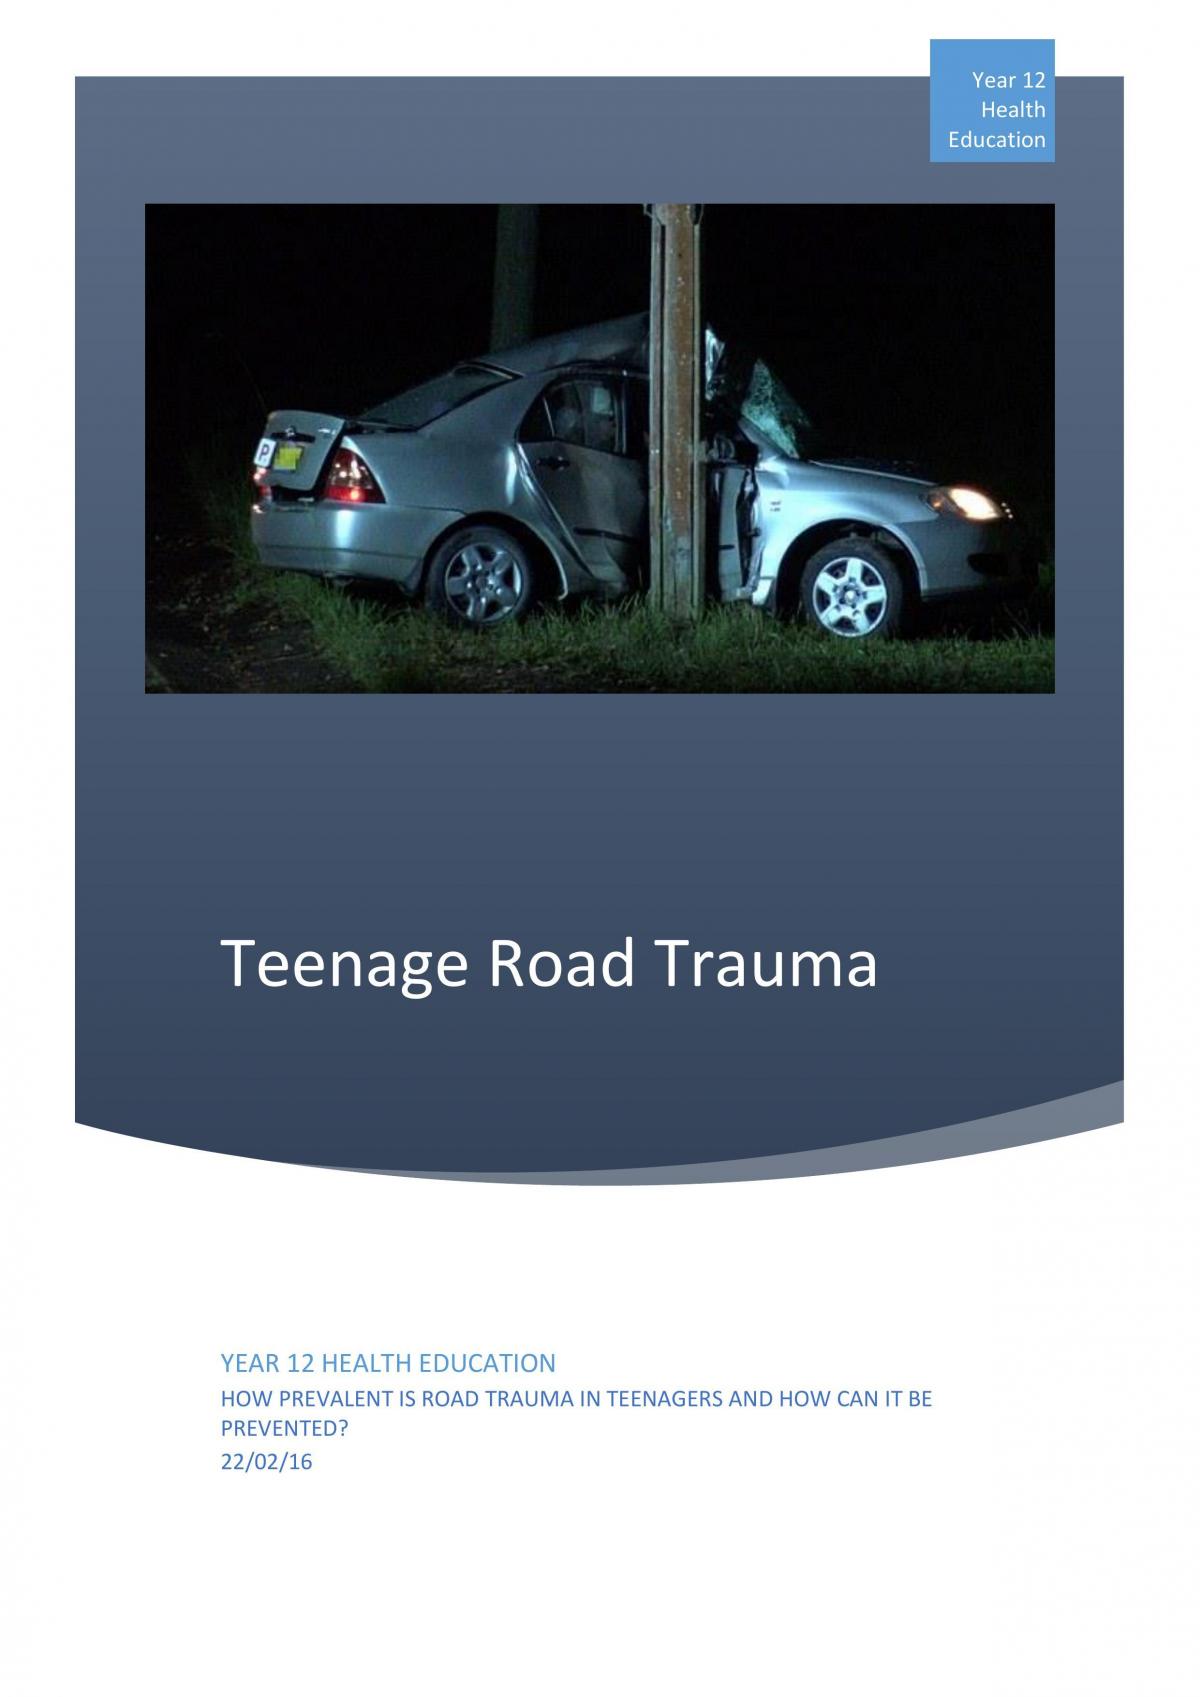 Health Education - Road Trauma  - Page 1